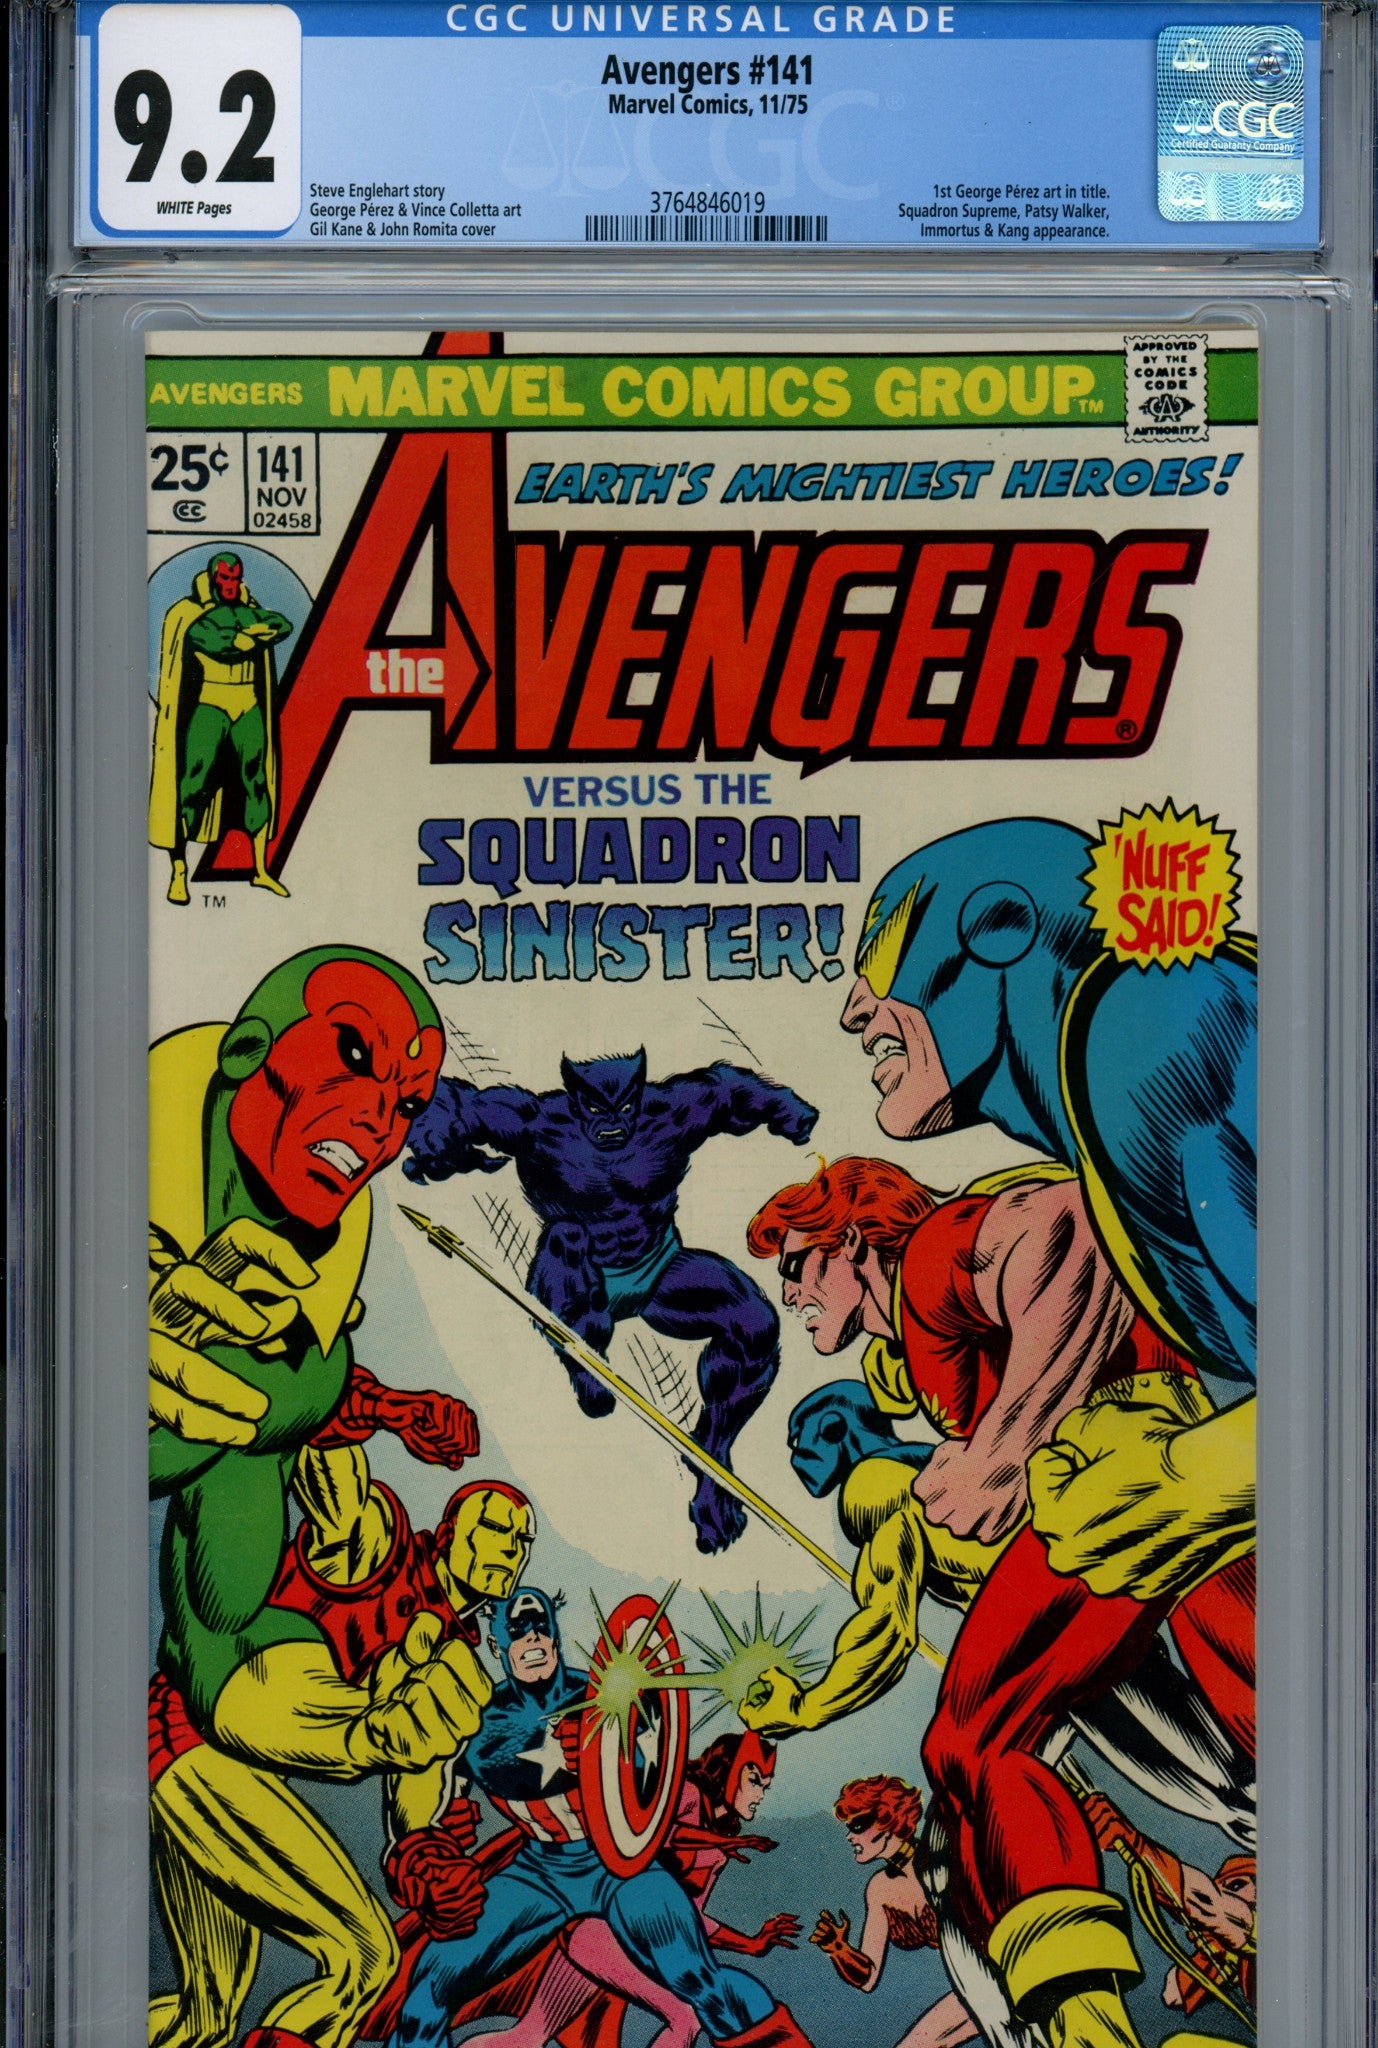 The Avengers Vol 1 141 CGC 9.2 (NM-) (1975) 